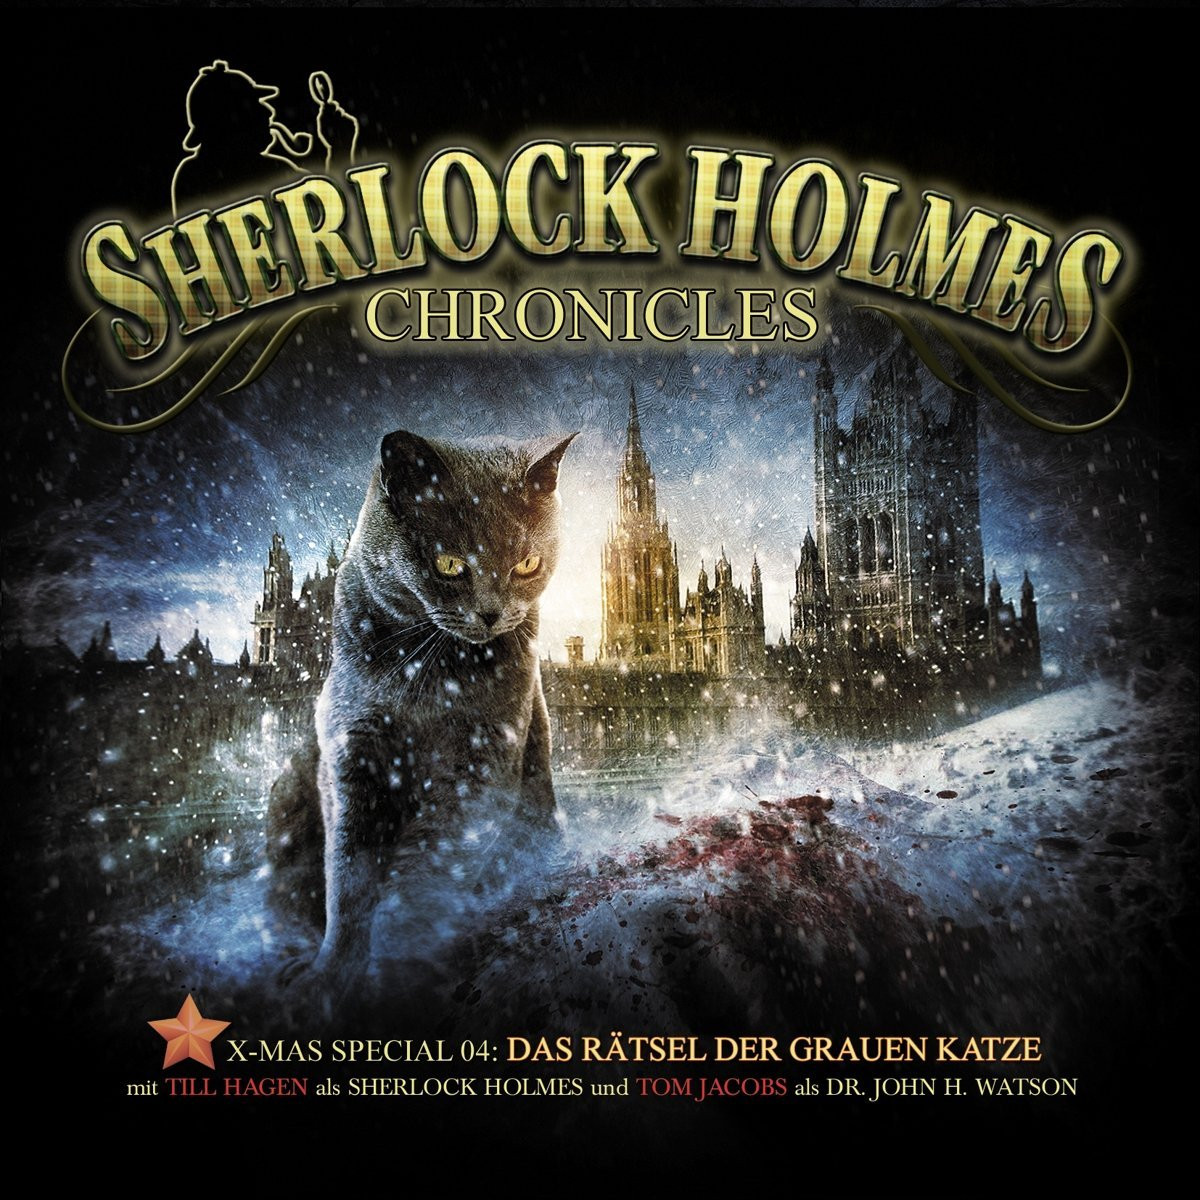 Sherlock Holmes Chronicles X-MAS Special 04: Das Rätsel der grauen Katze